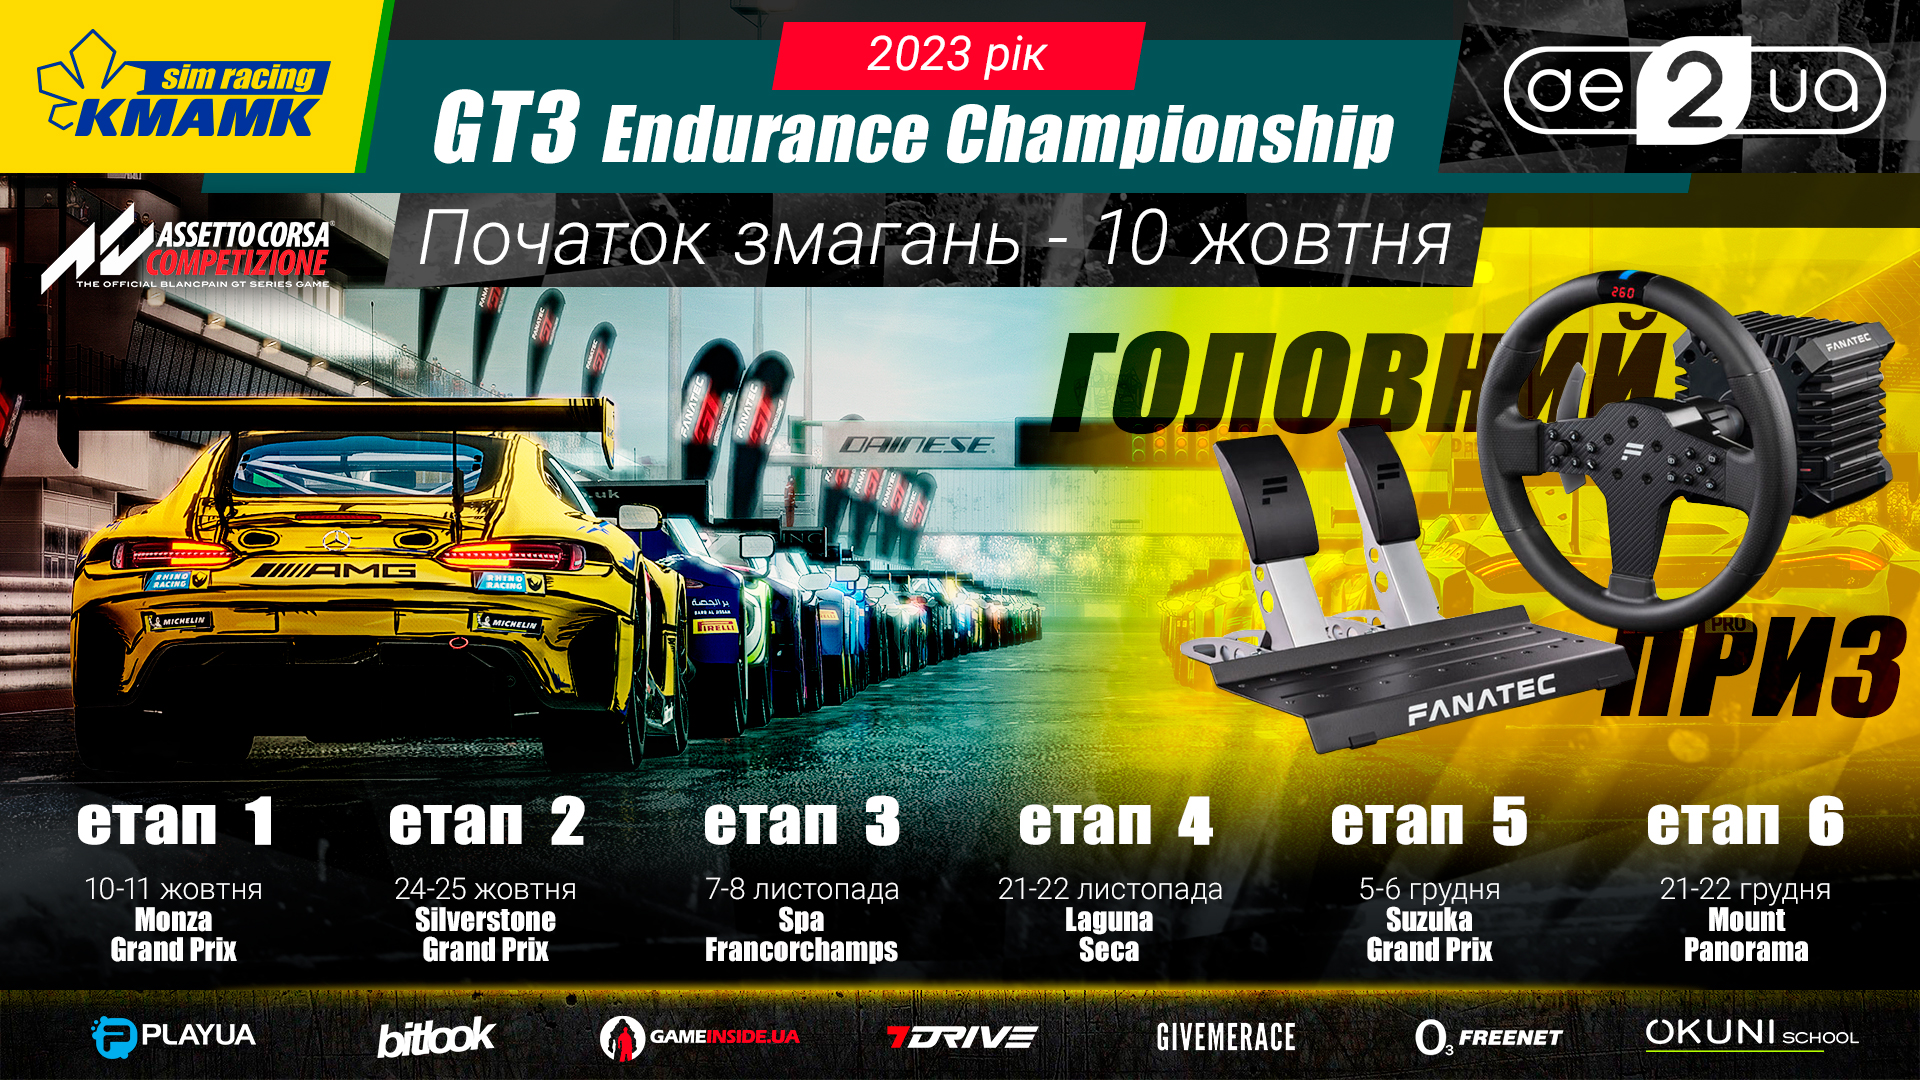 gt3 endurance announcement